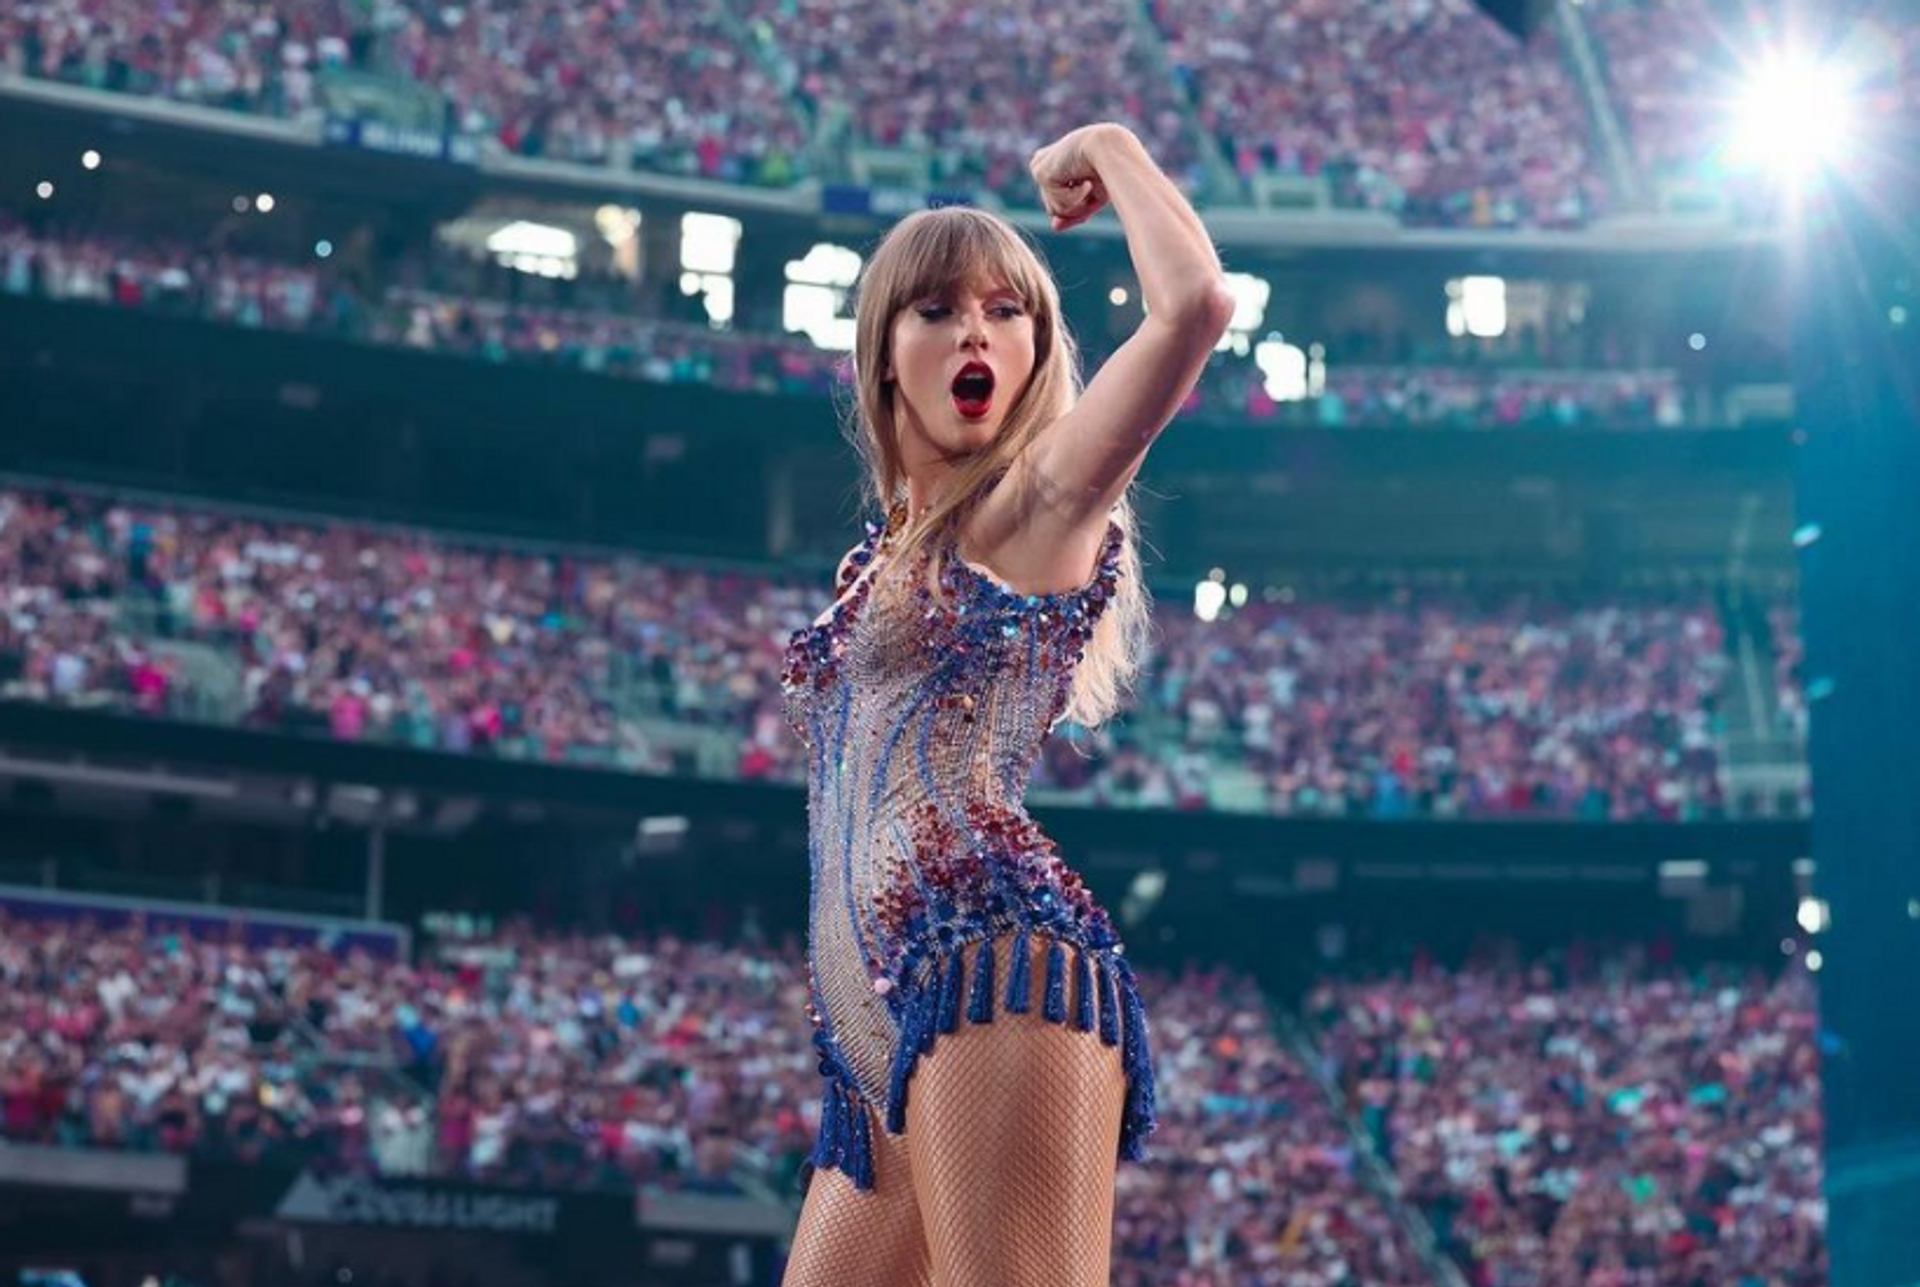 Taylor Swift fandom causes huge spike in NFL viewership